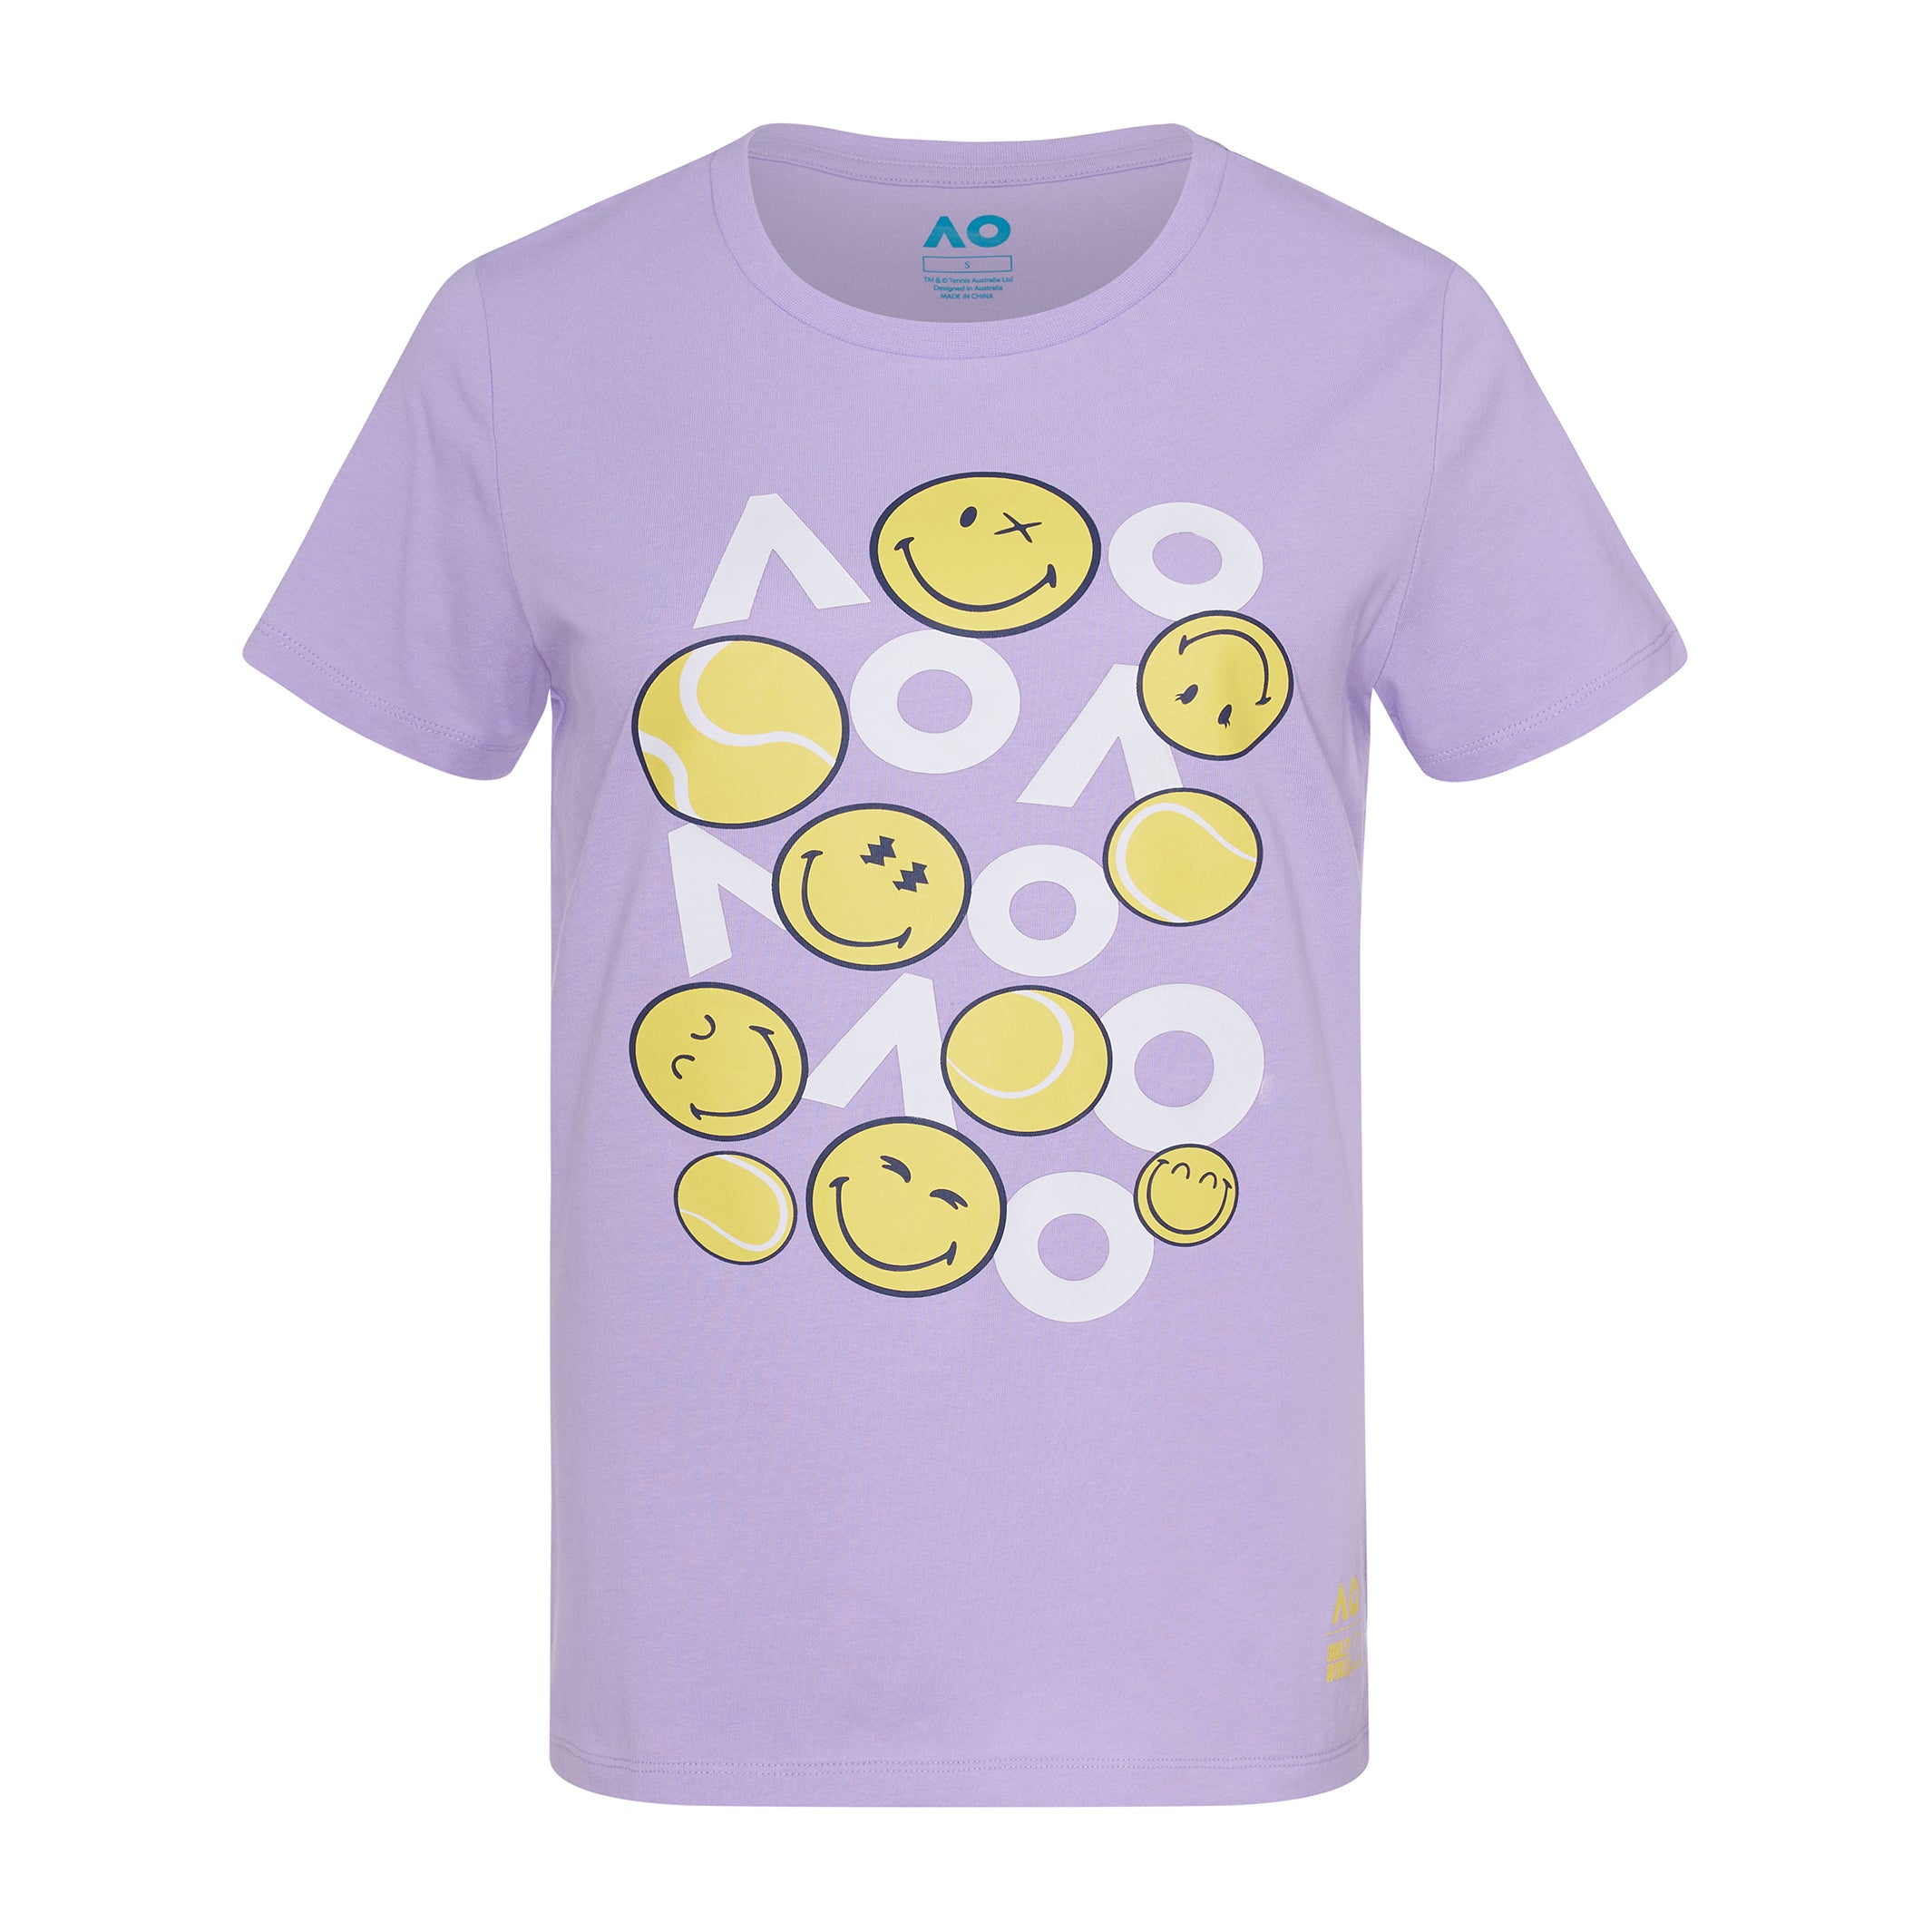 Women's Purple T-Shirt SmileyWorld AO Tennis Balls Front View